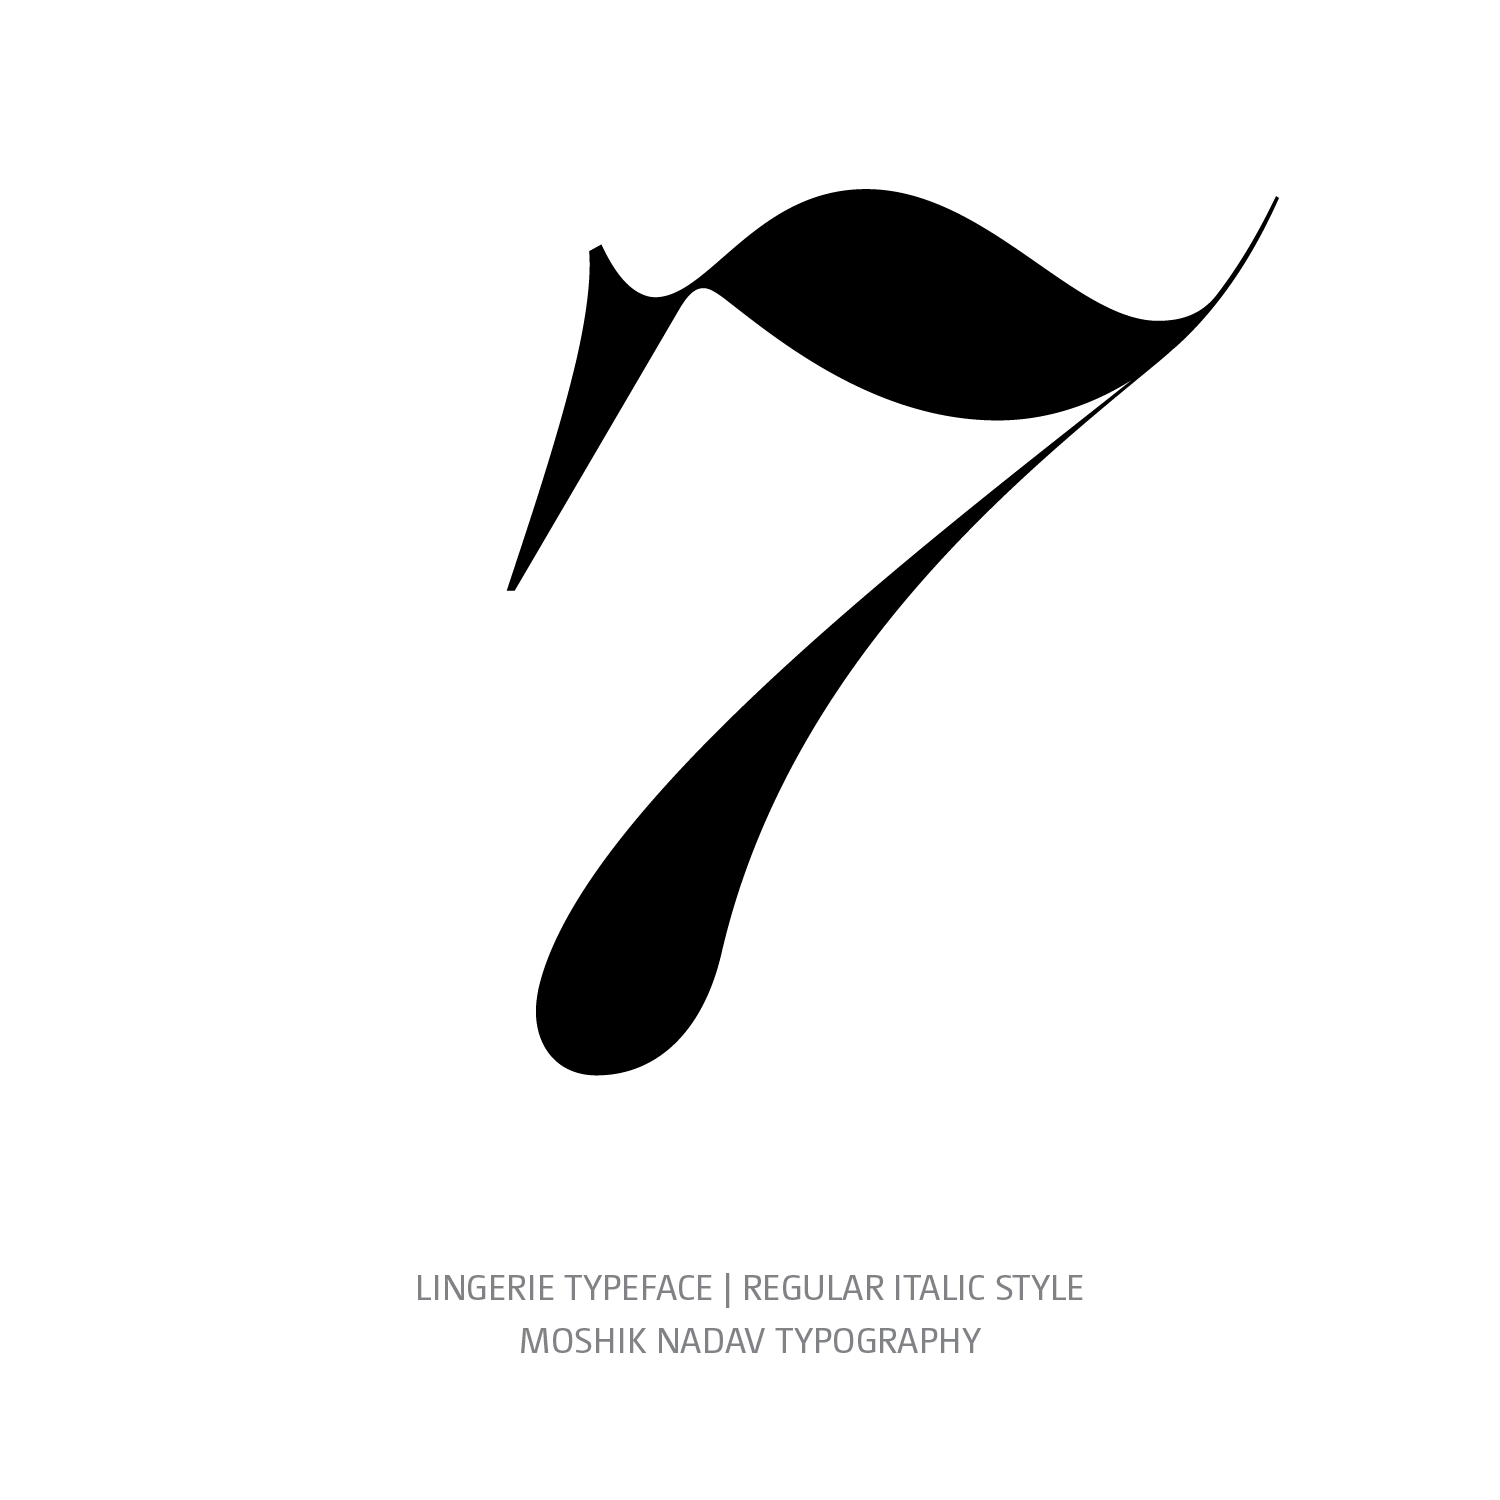 Lingerie Typeface Regular Italic 7 - Fashion fonts by Moshik Nadav Typography